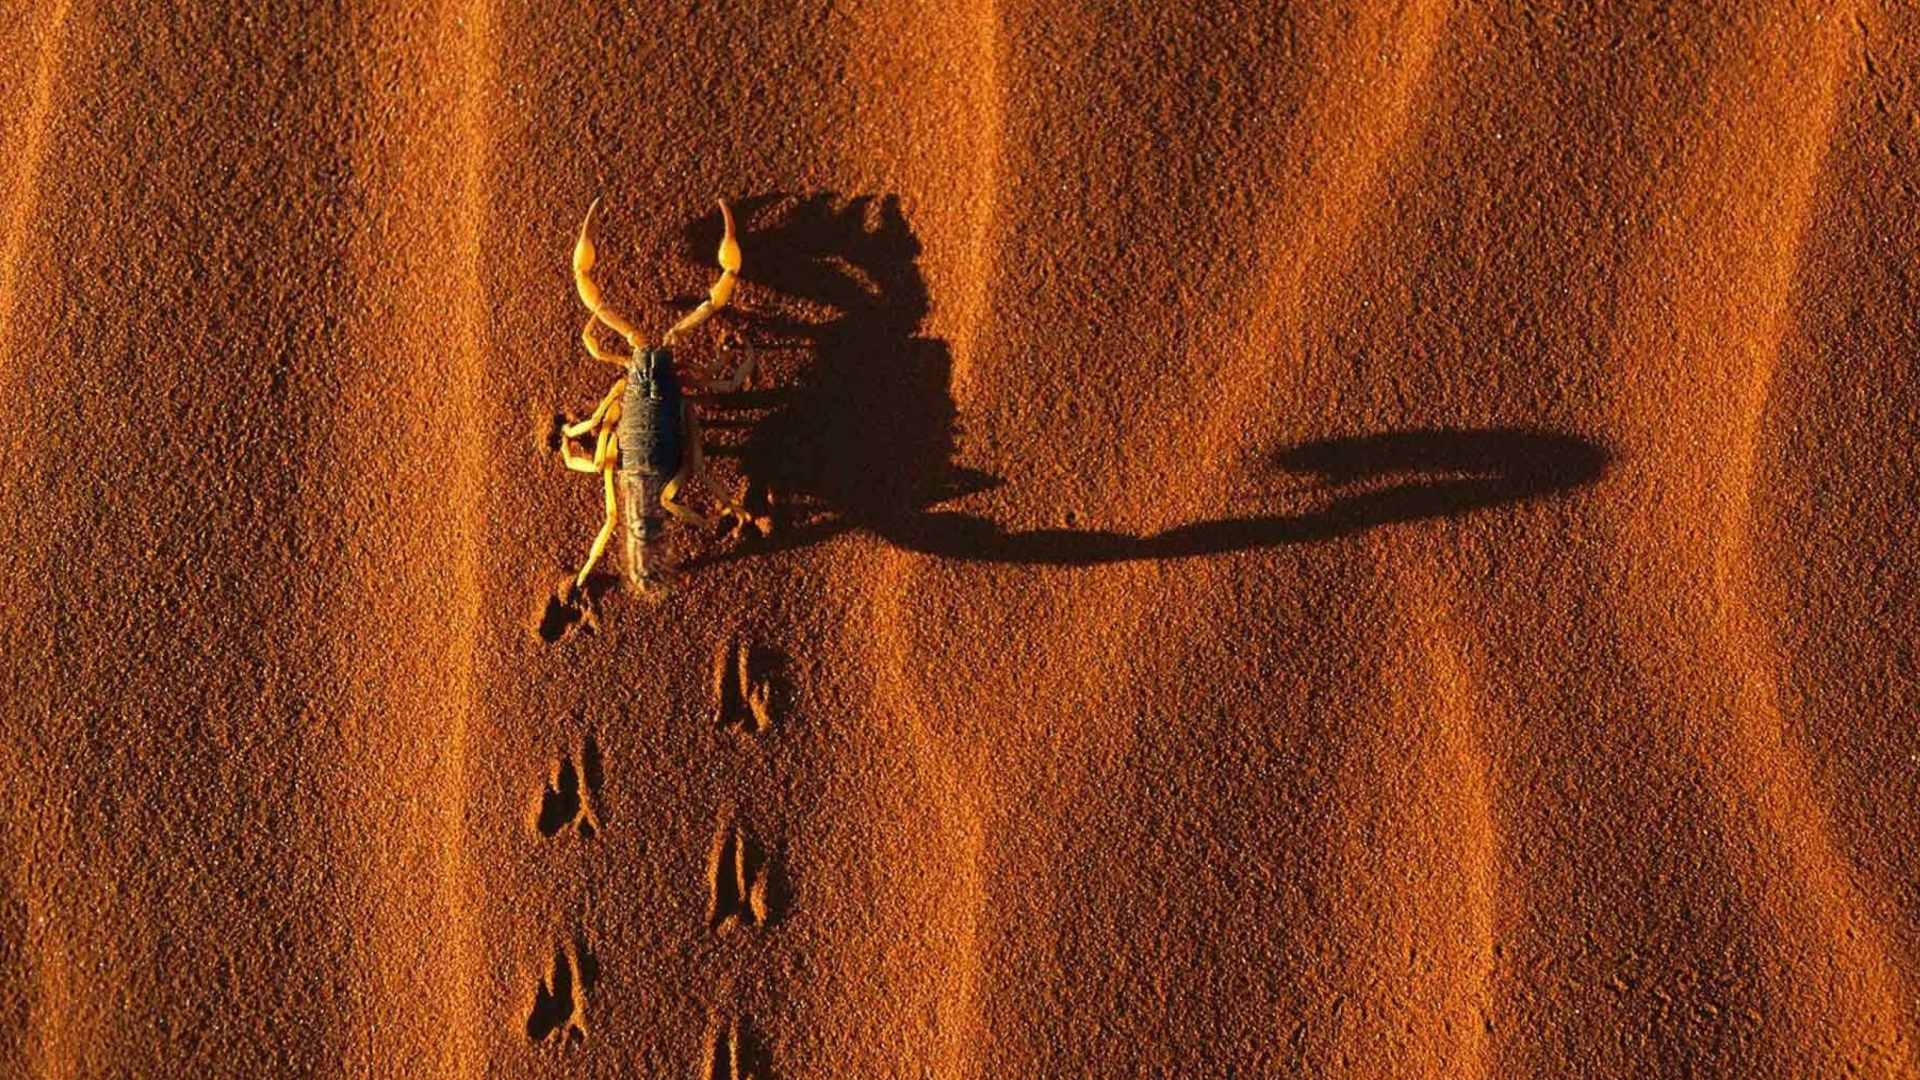 Scorpion On Sand wallpaper 1920x1080